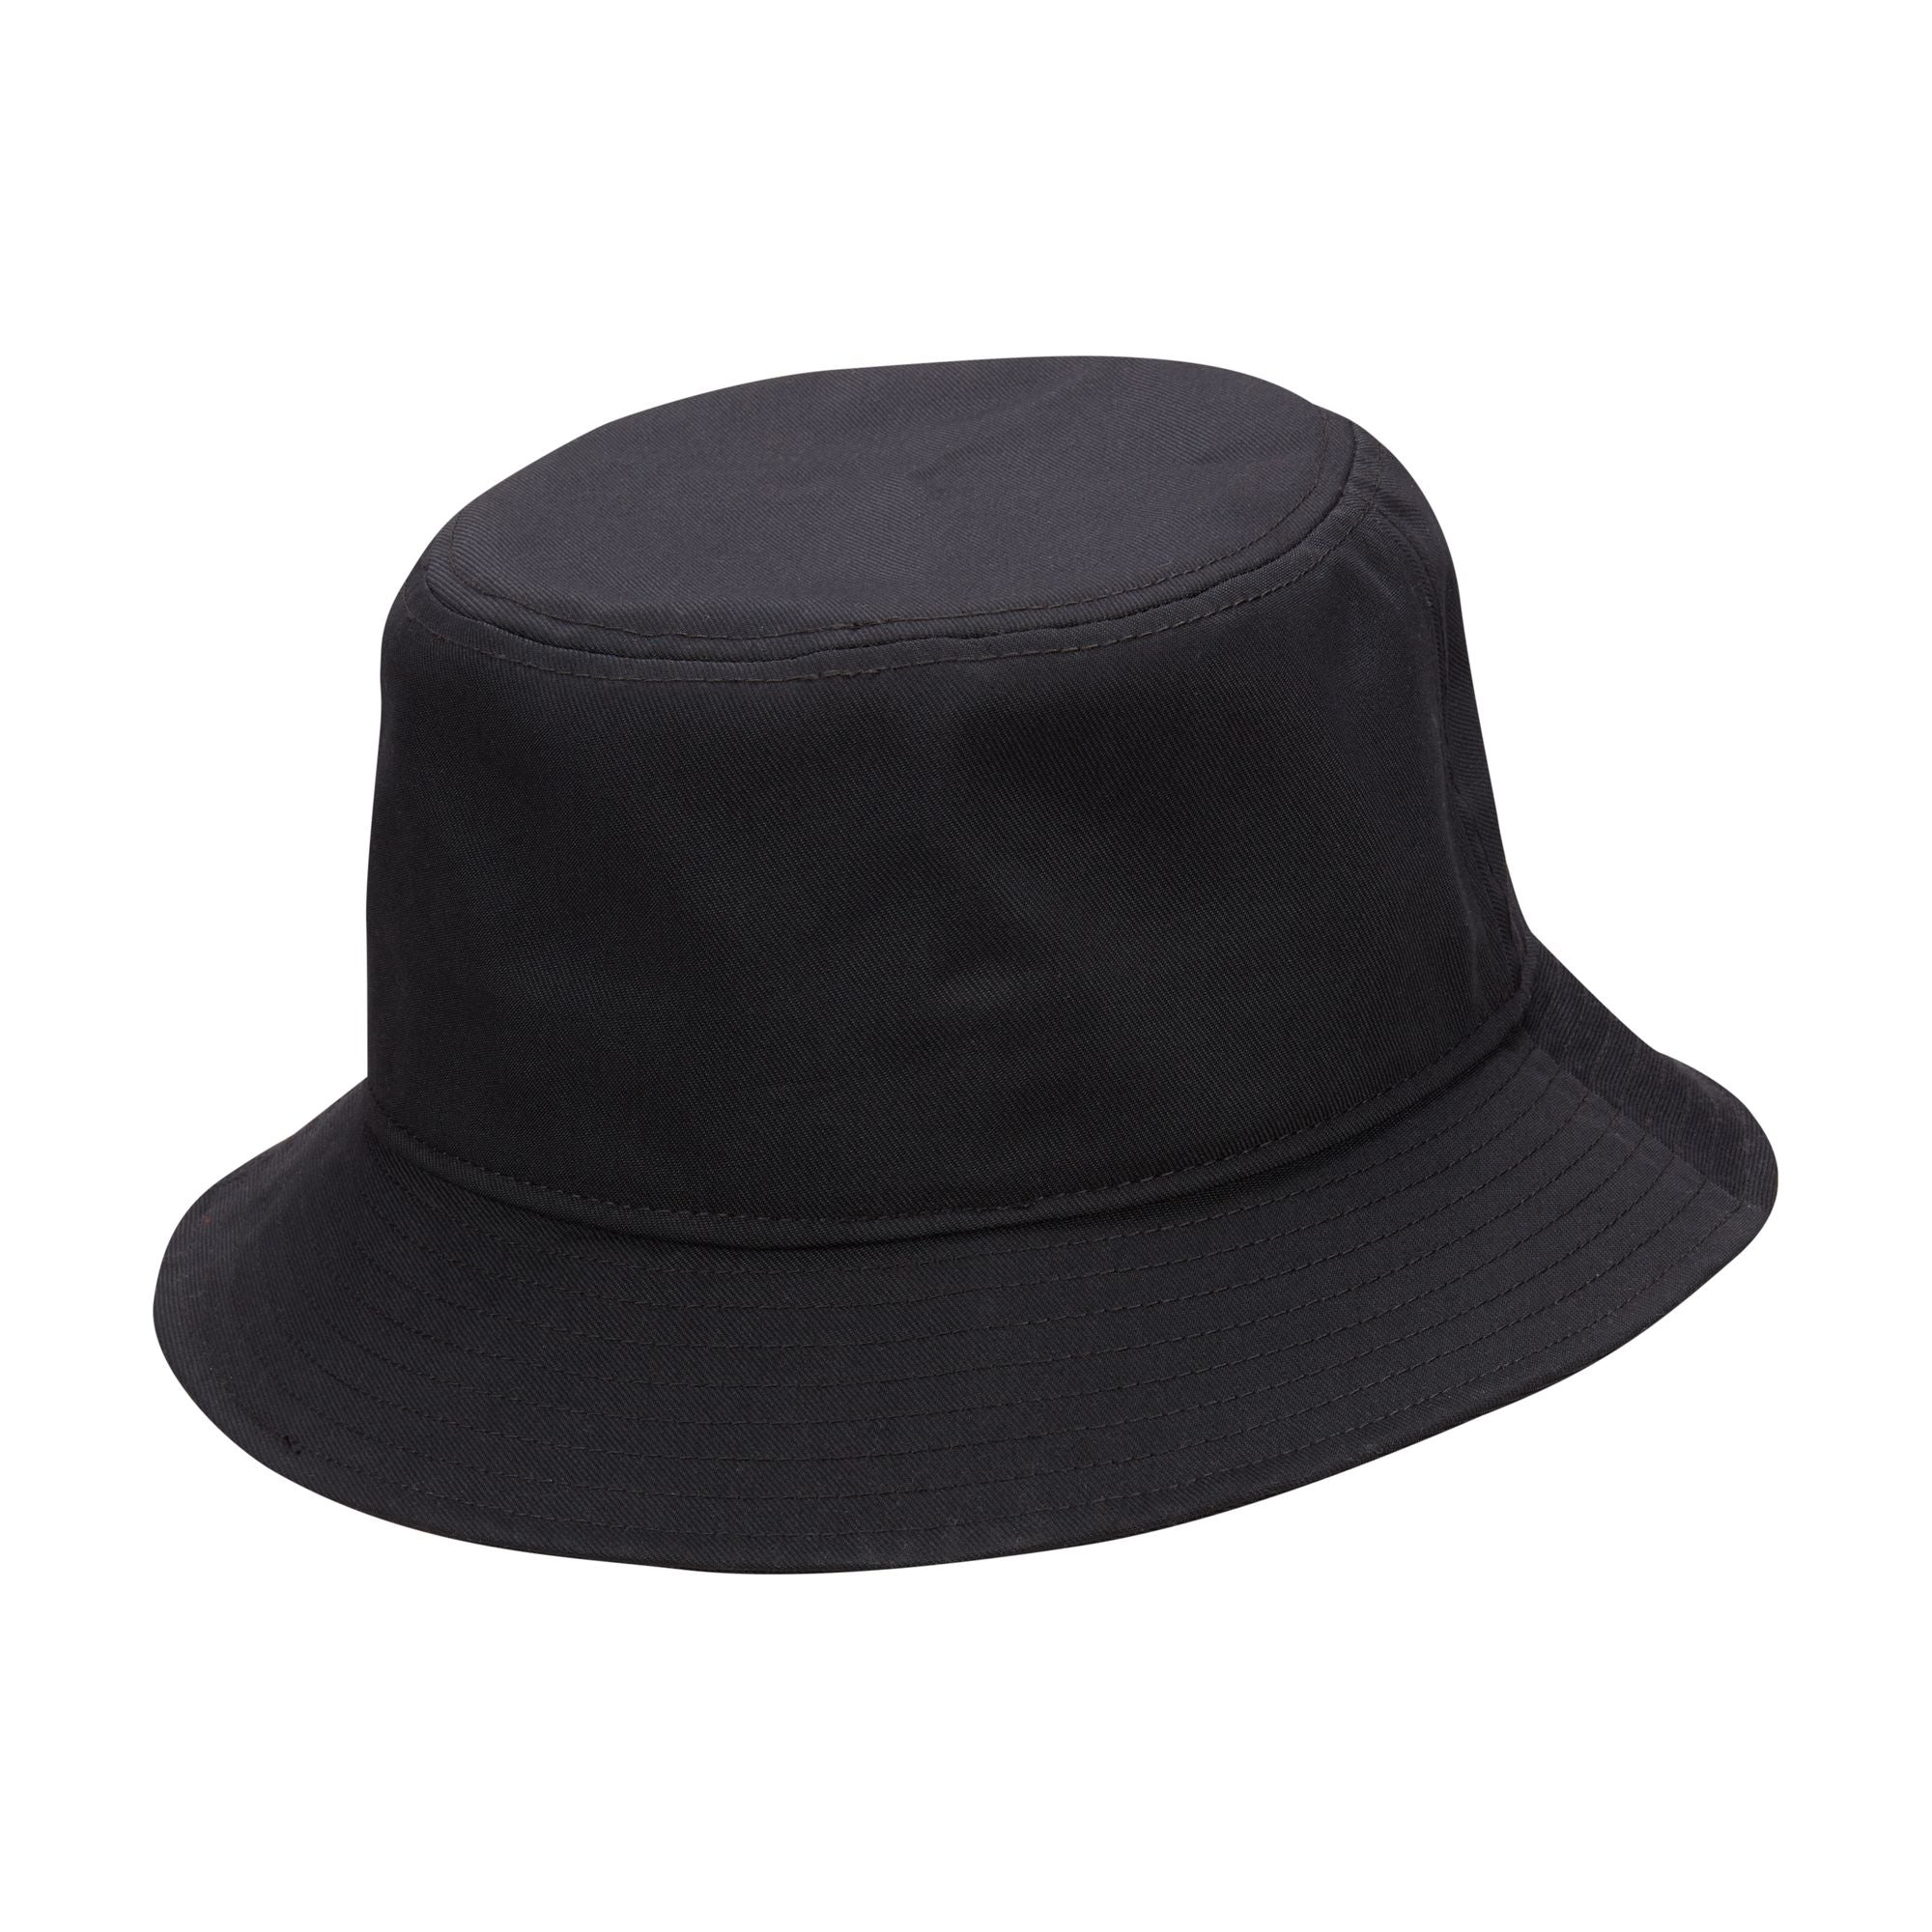 Nike Apex Swoosh Bucket Hat (Black)